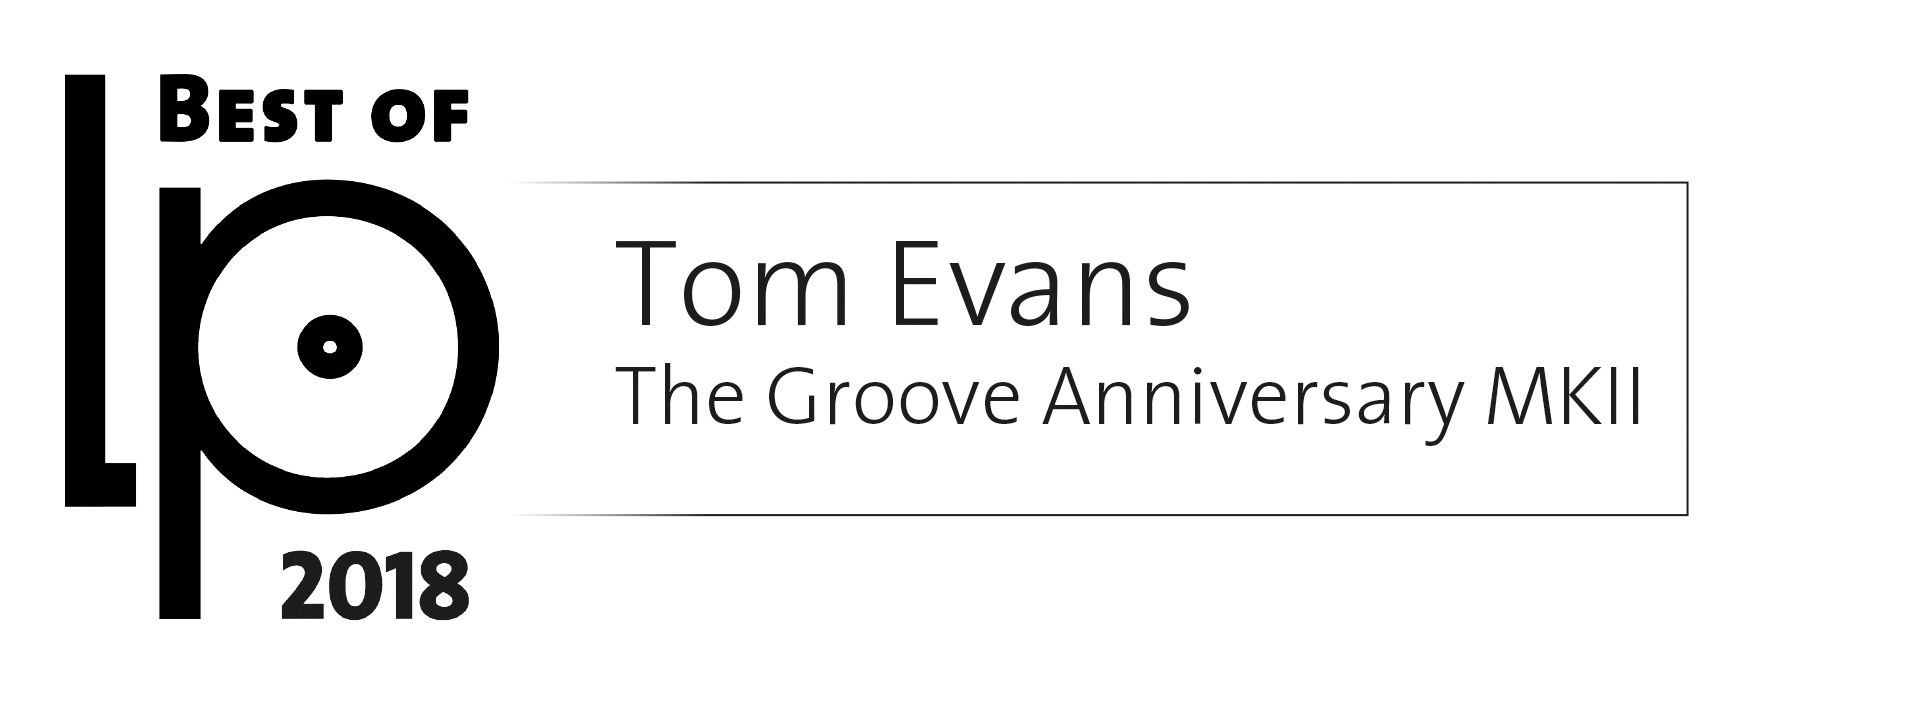 BEST OF LP 2018, TOM EVANS THE GROOVE ANNIVERSARY MK 2